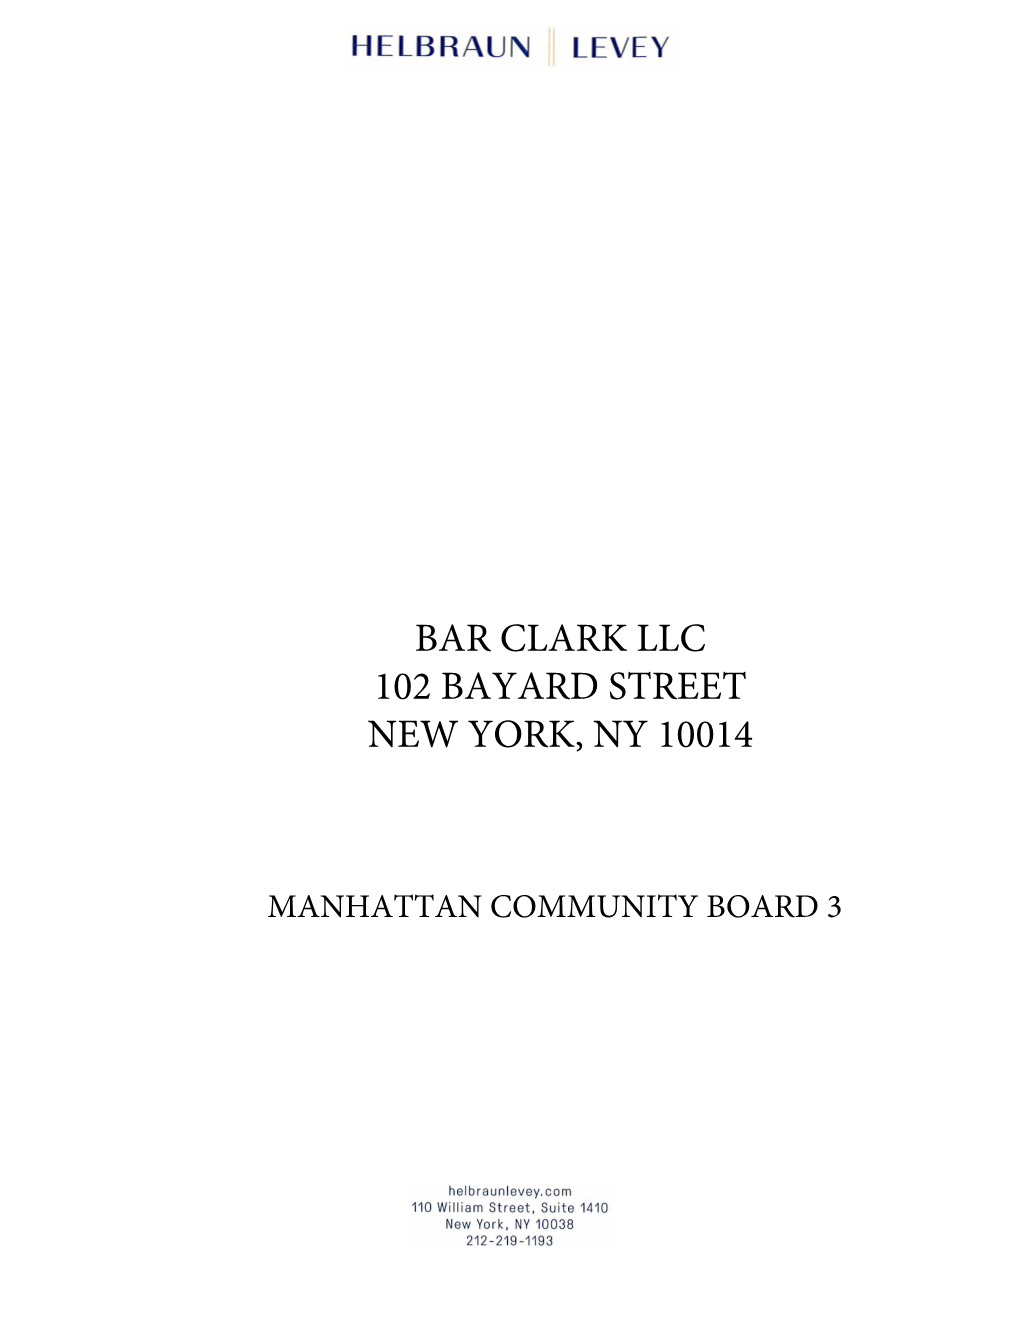 Bar Clark Llc 102 Bayard Street New York, Ny 10014